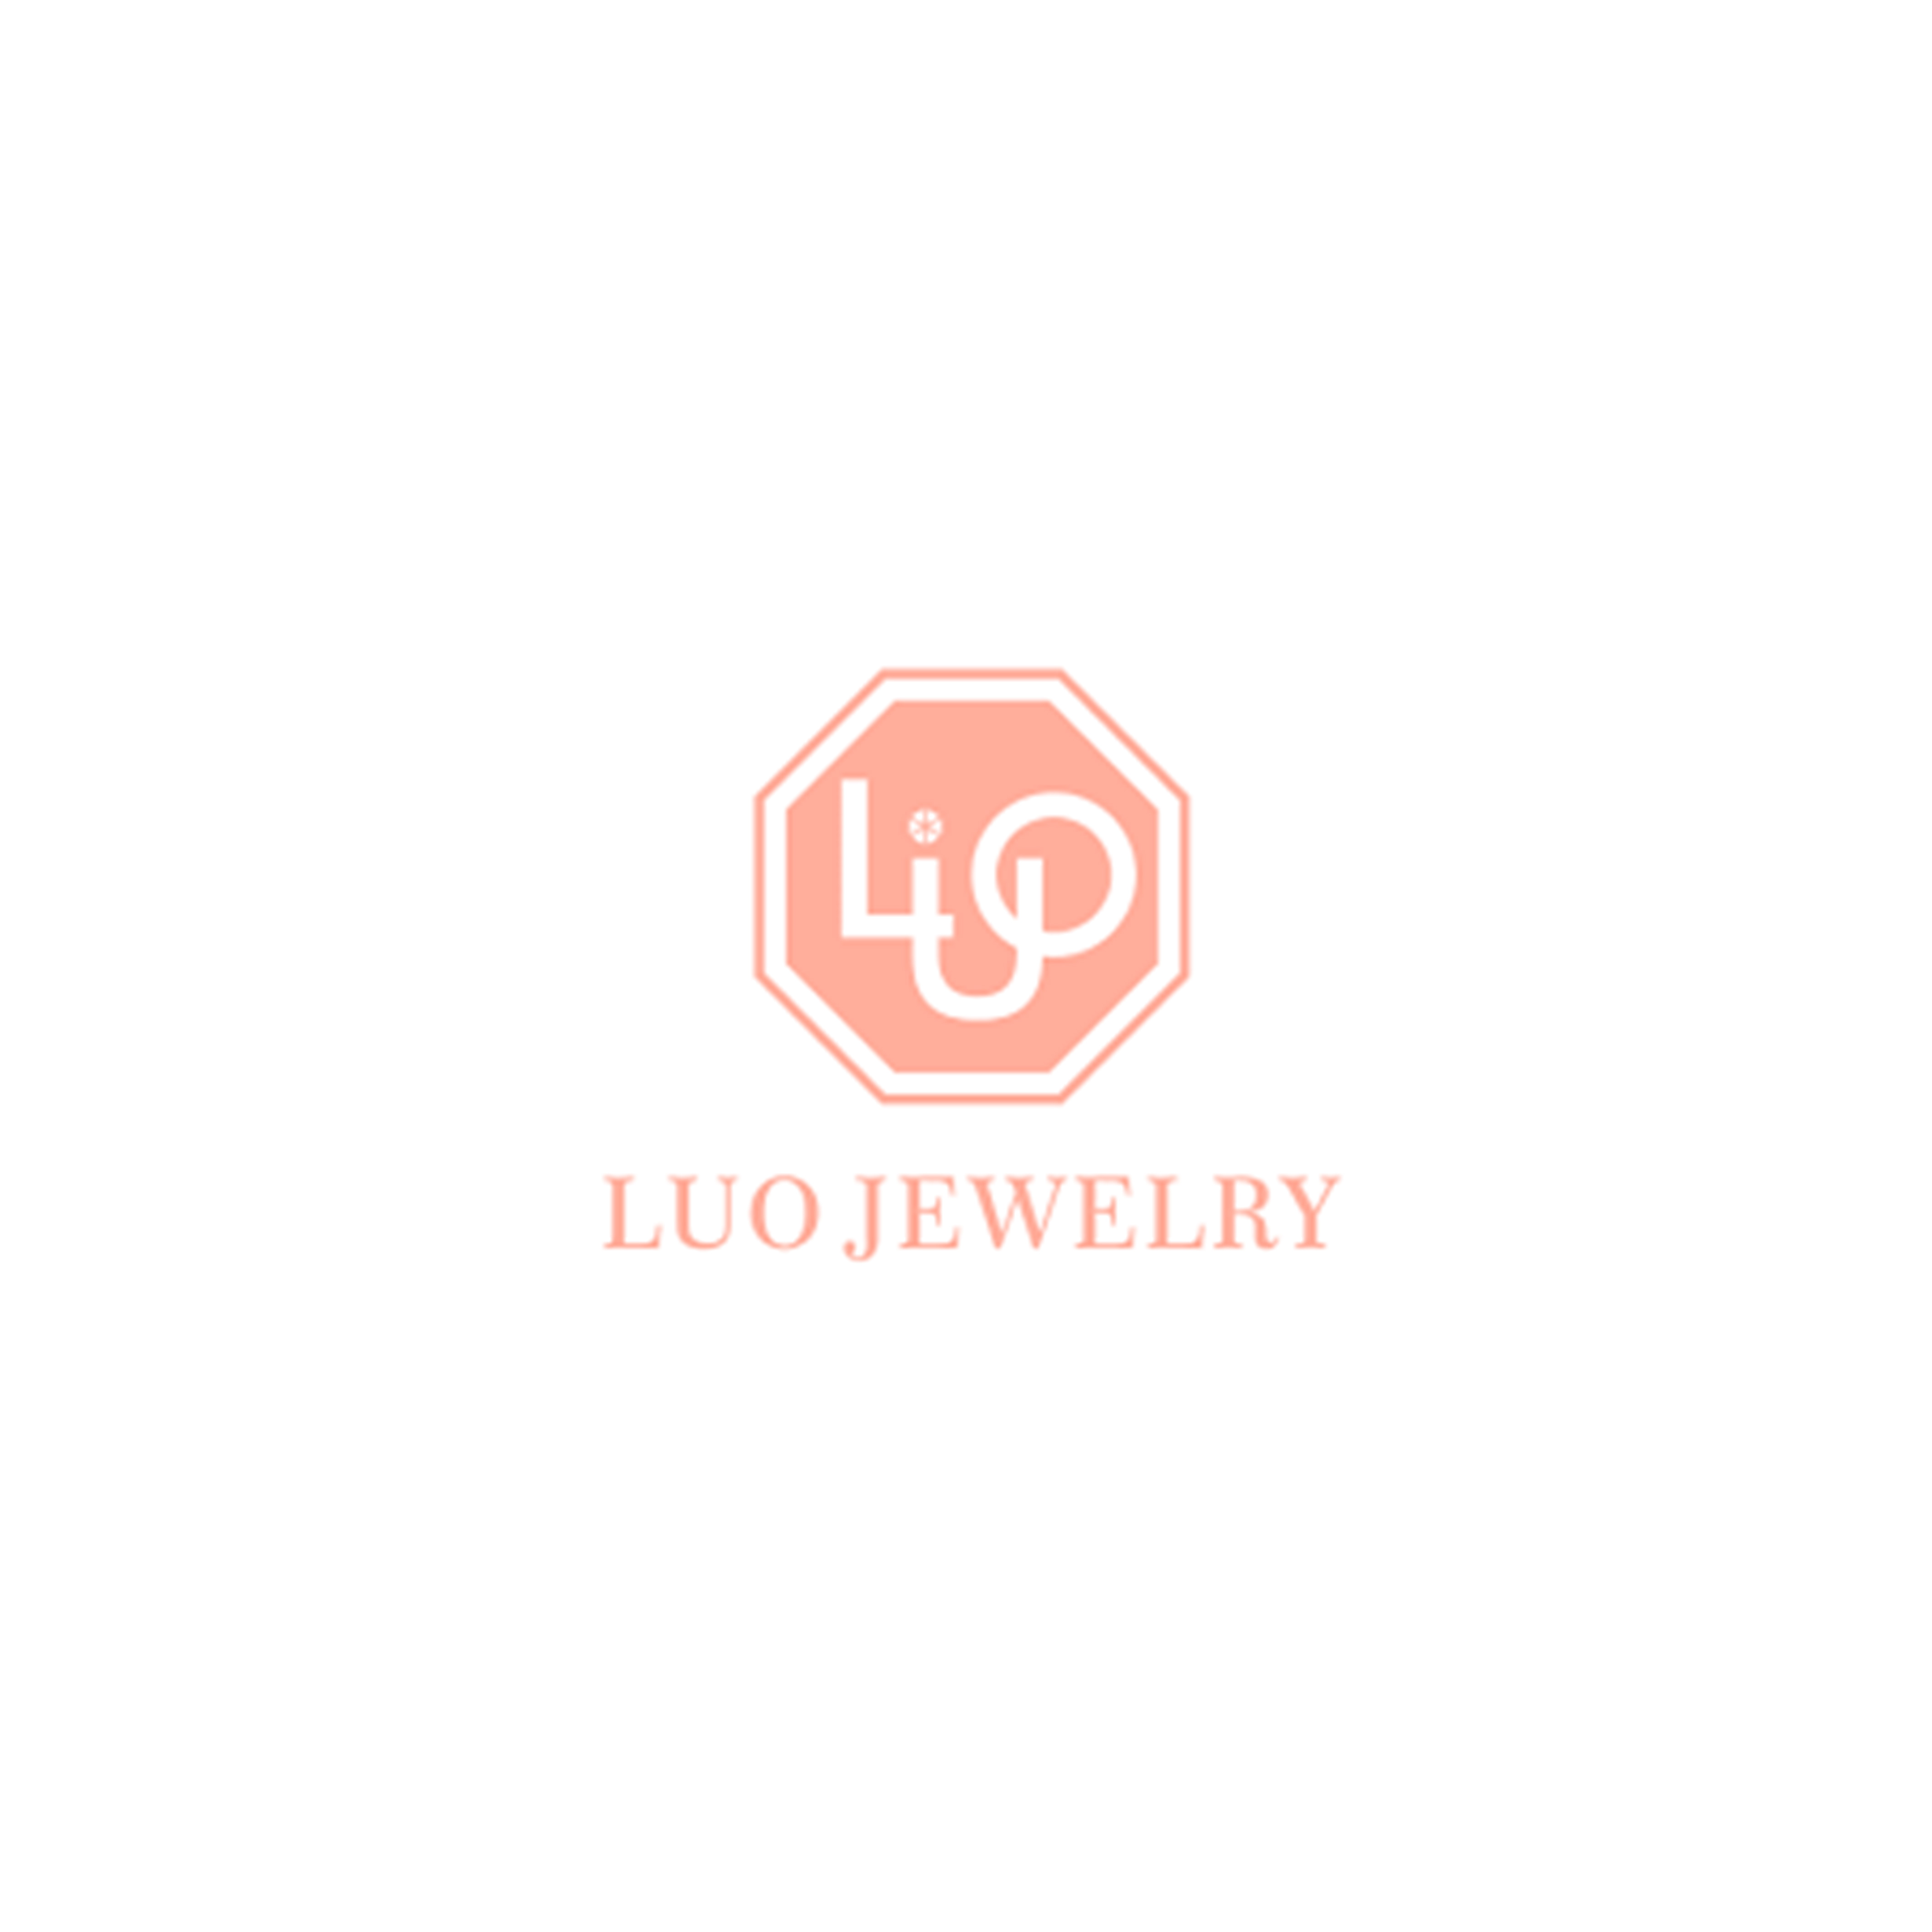 Luo Jewelry logo